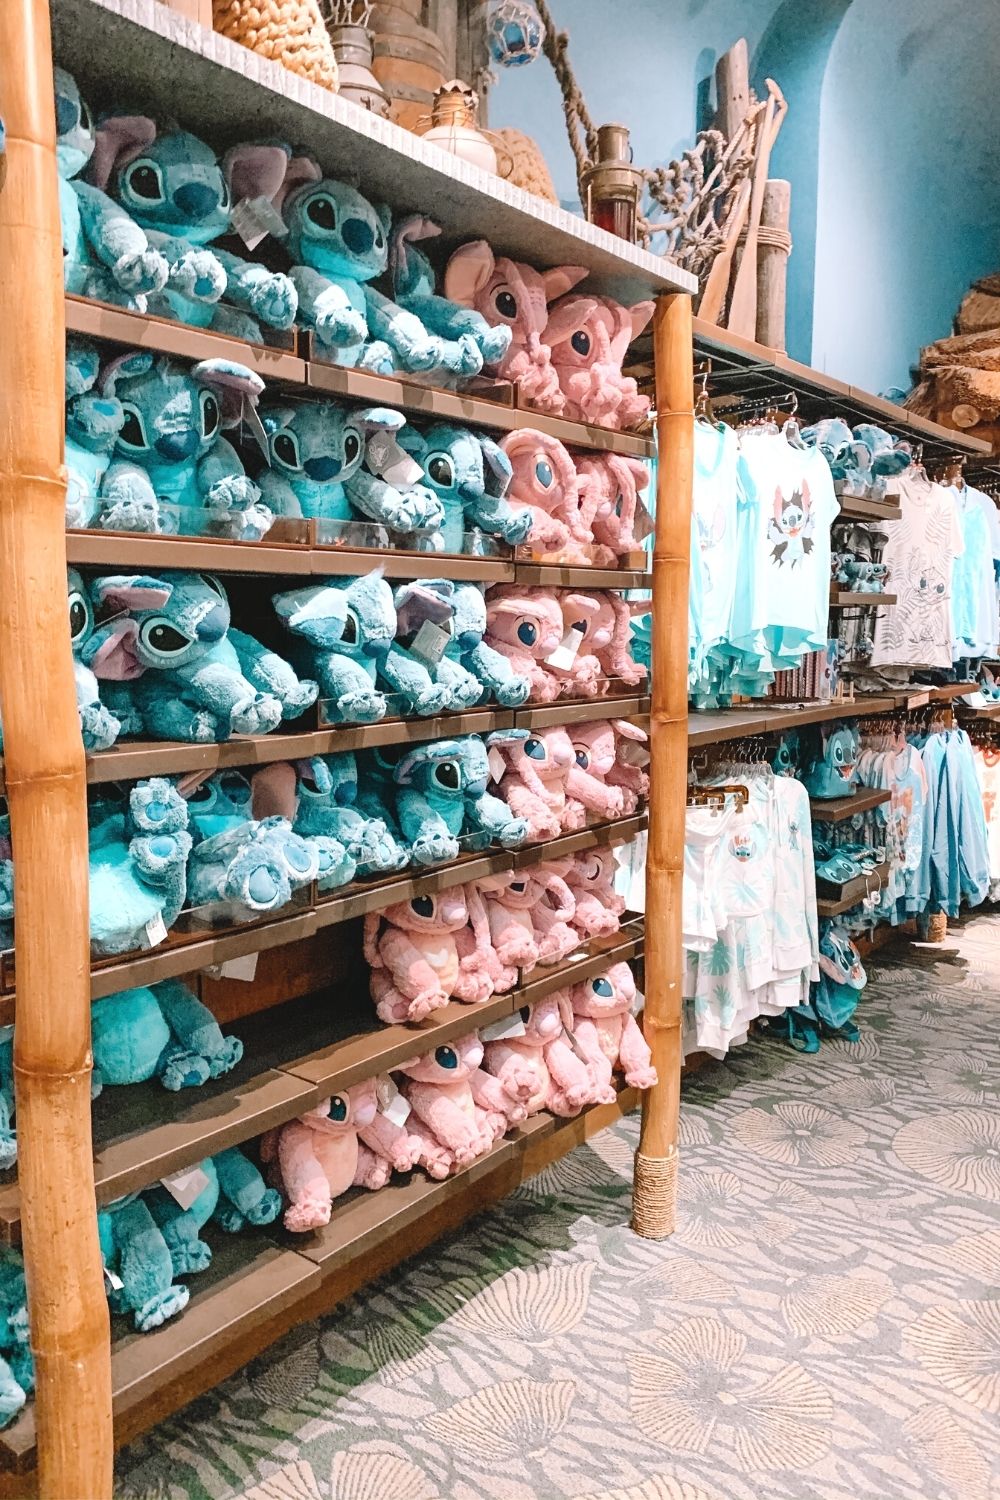 Lilo & Stitch souvenirs for sale in the Polynesian resort at Disney World